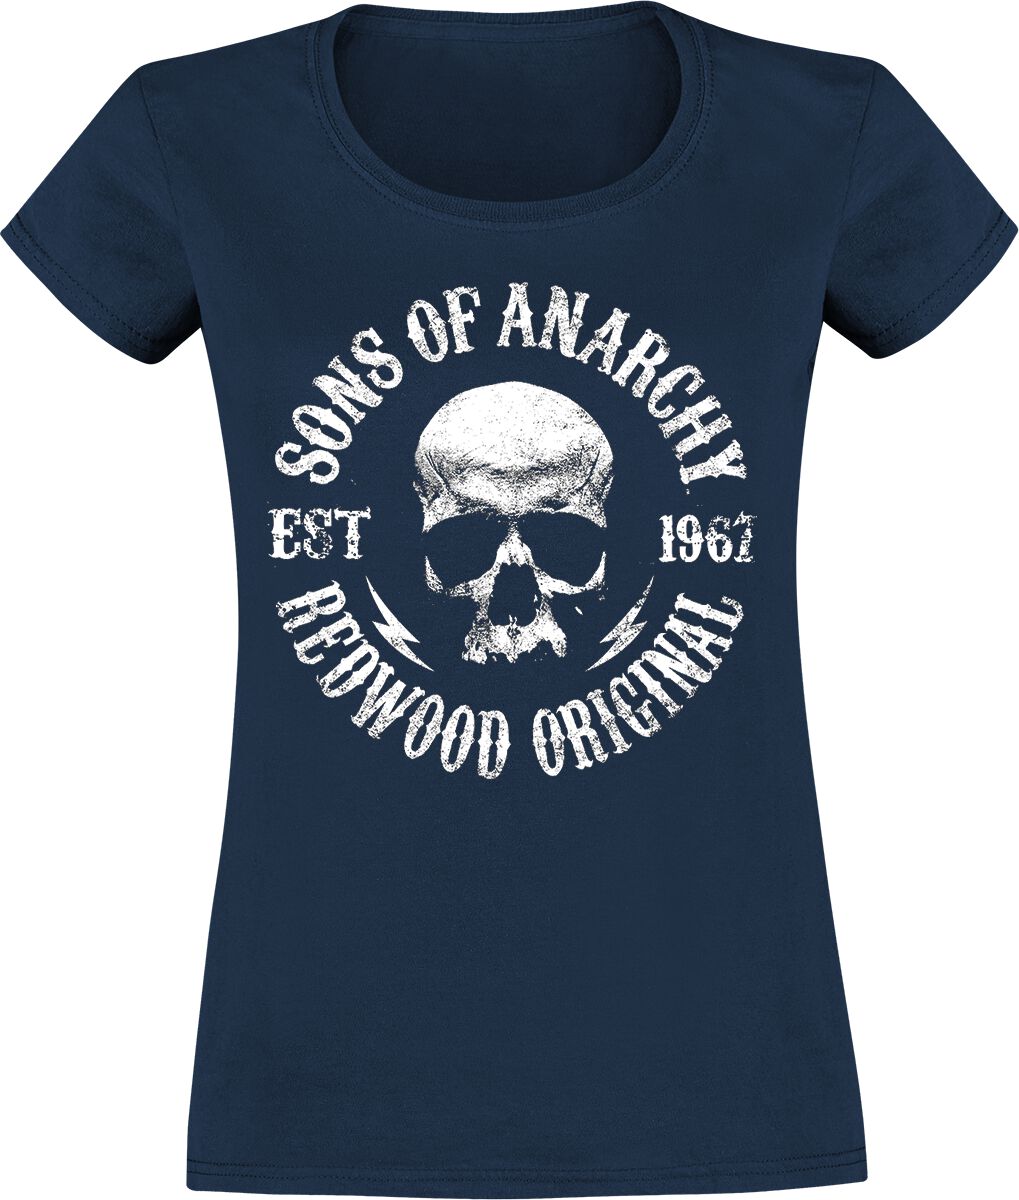 Sons Of Anarchy Redwood Original T-Shirt blue